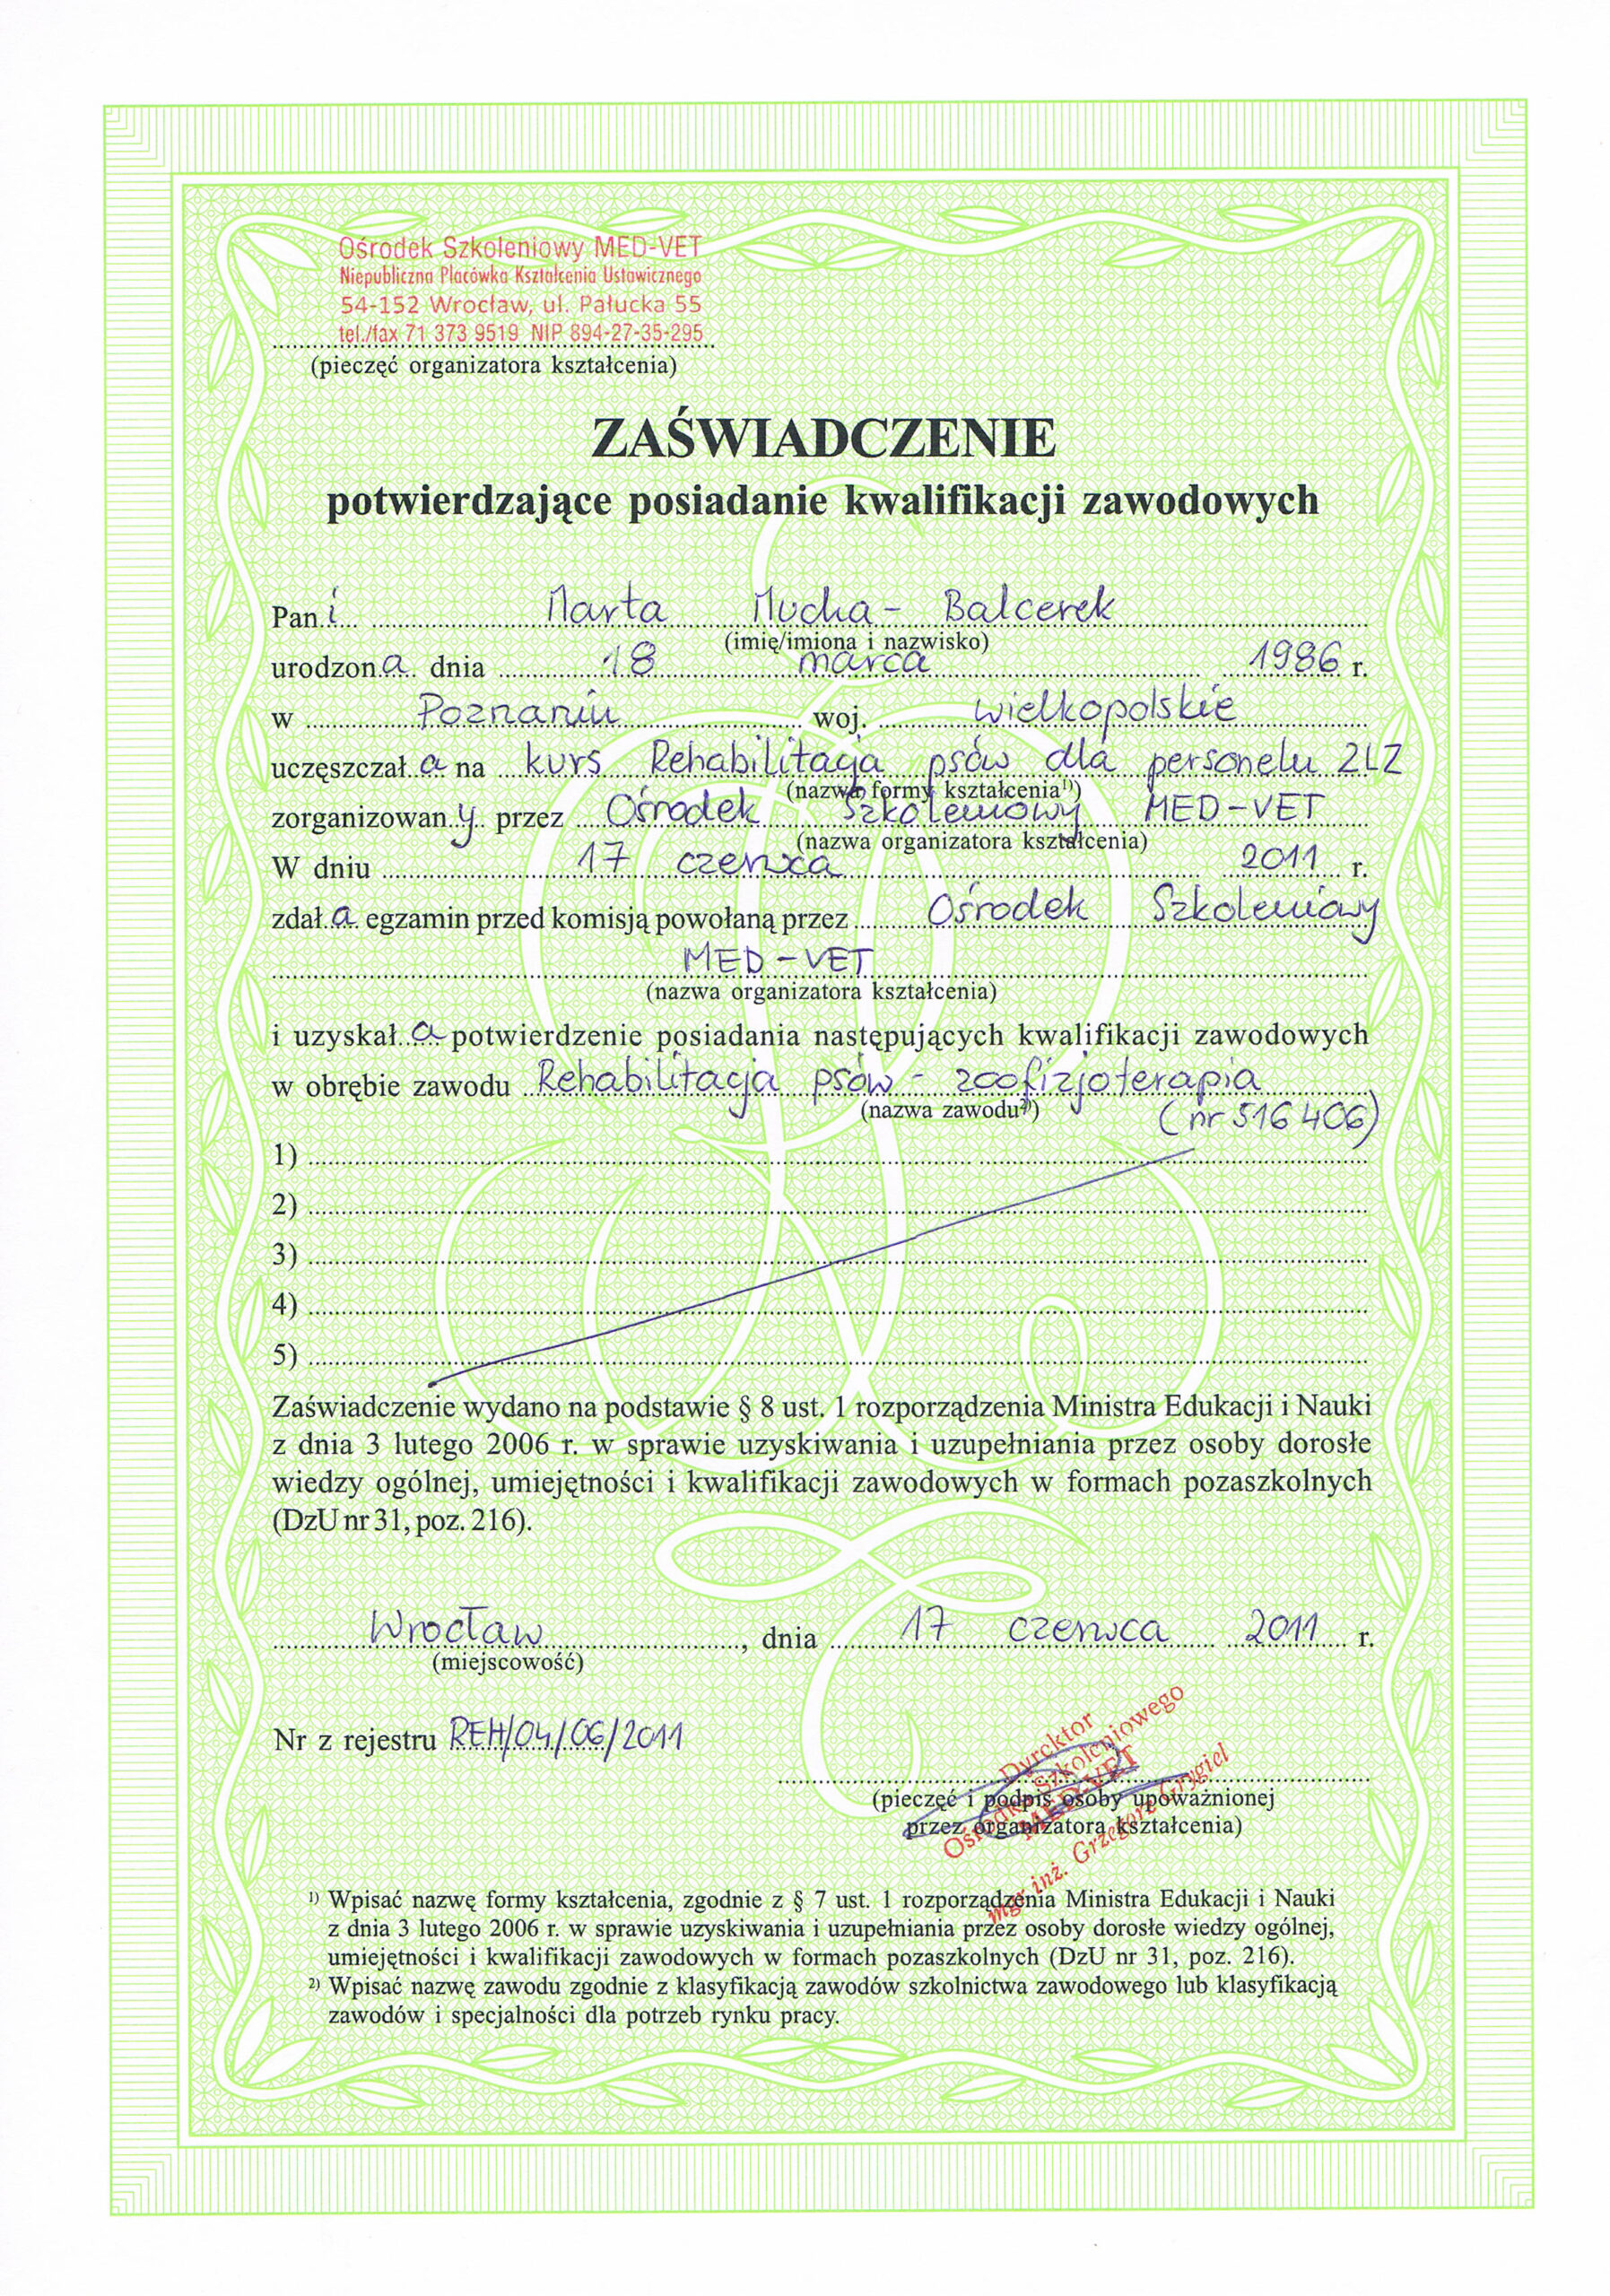 kwalifikacje zawodowe zoofizjoterapeuta Mucha-Balcerek